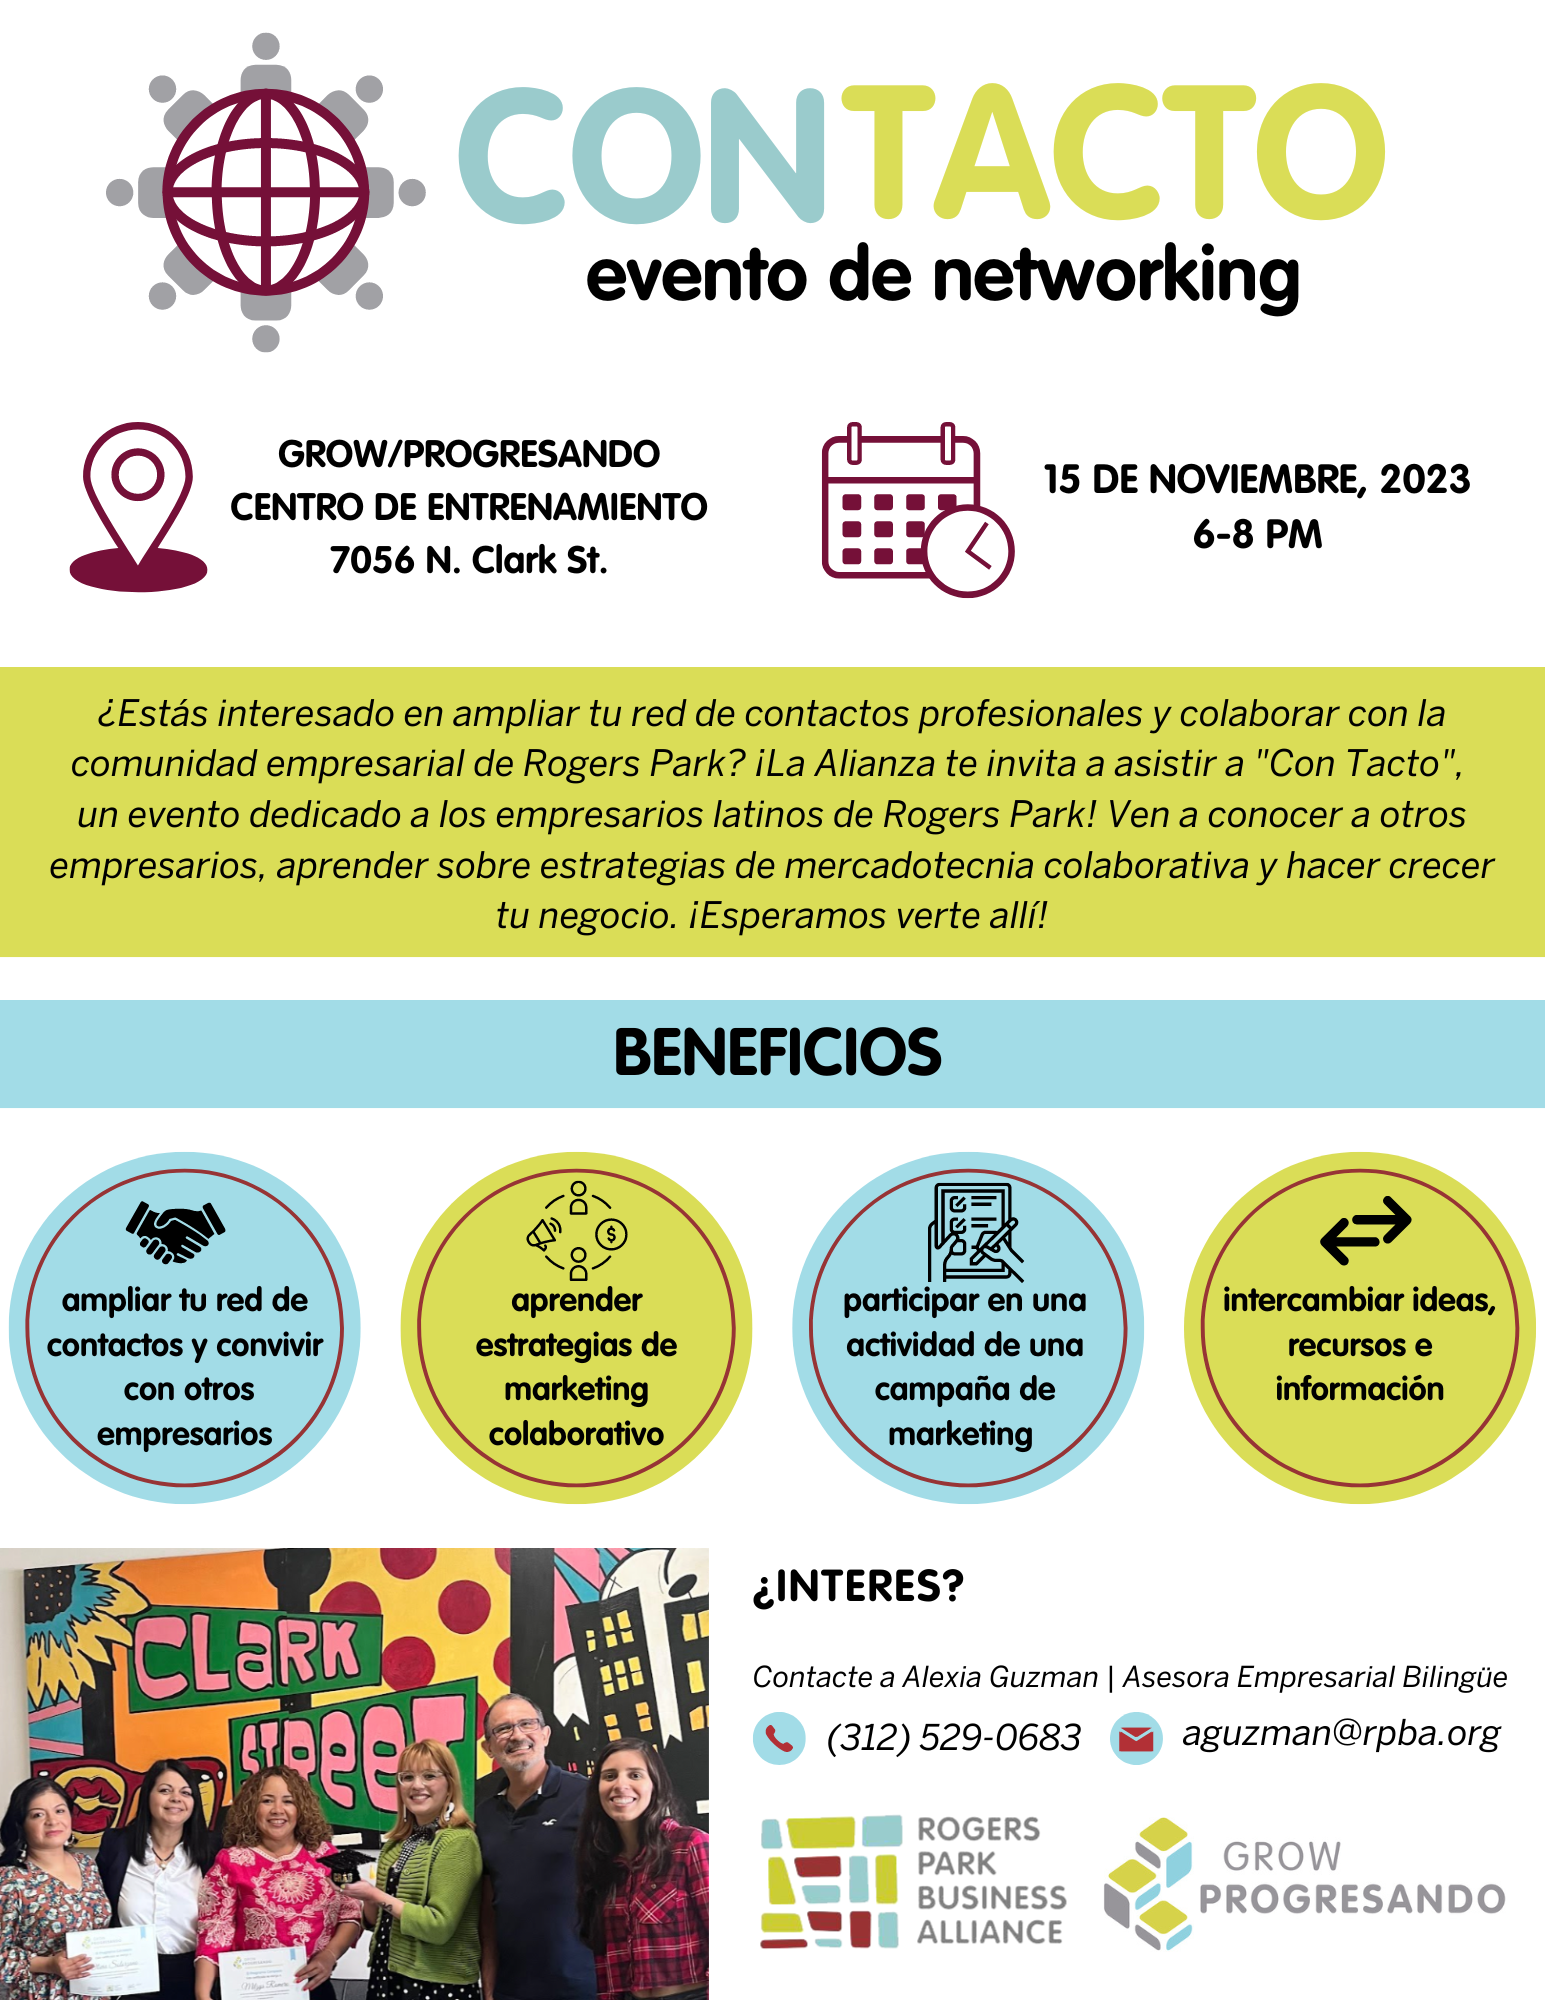 Con Tacto Evento de Networking, rogers-park-business-alliance